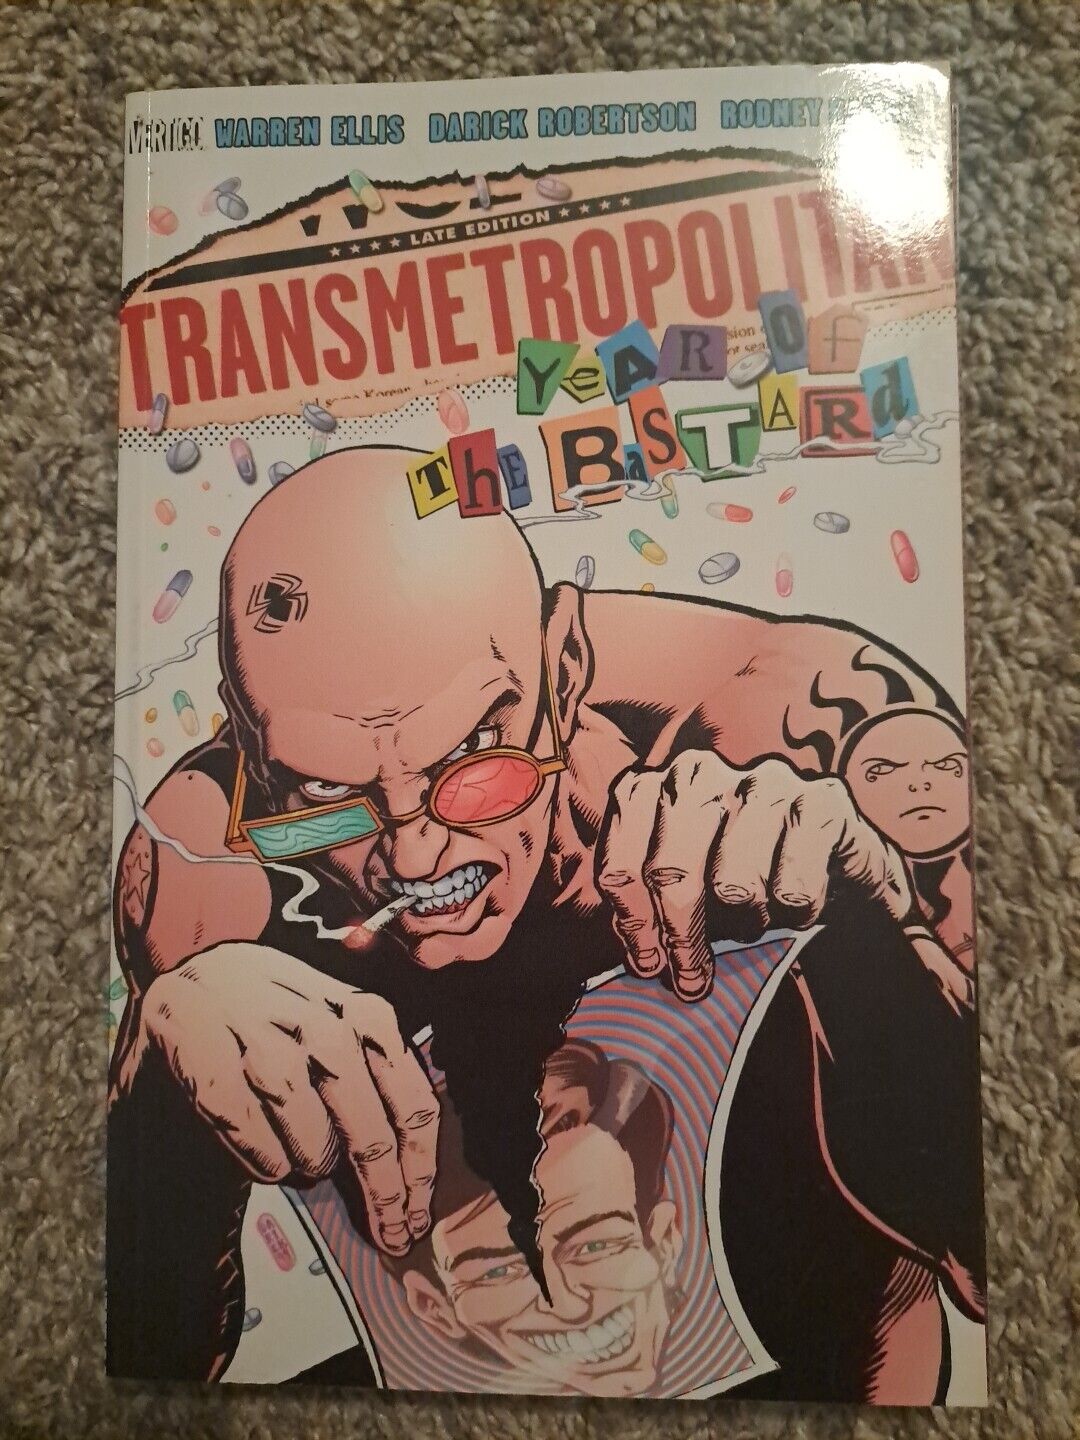 Transmetropolitan #3 (DC Comics November 1999)